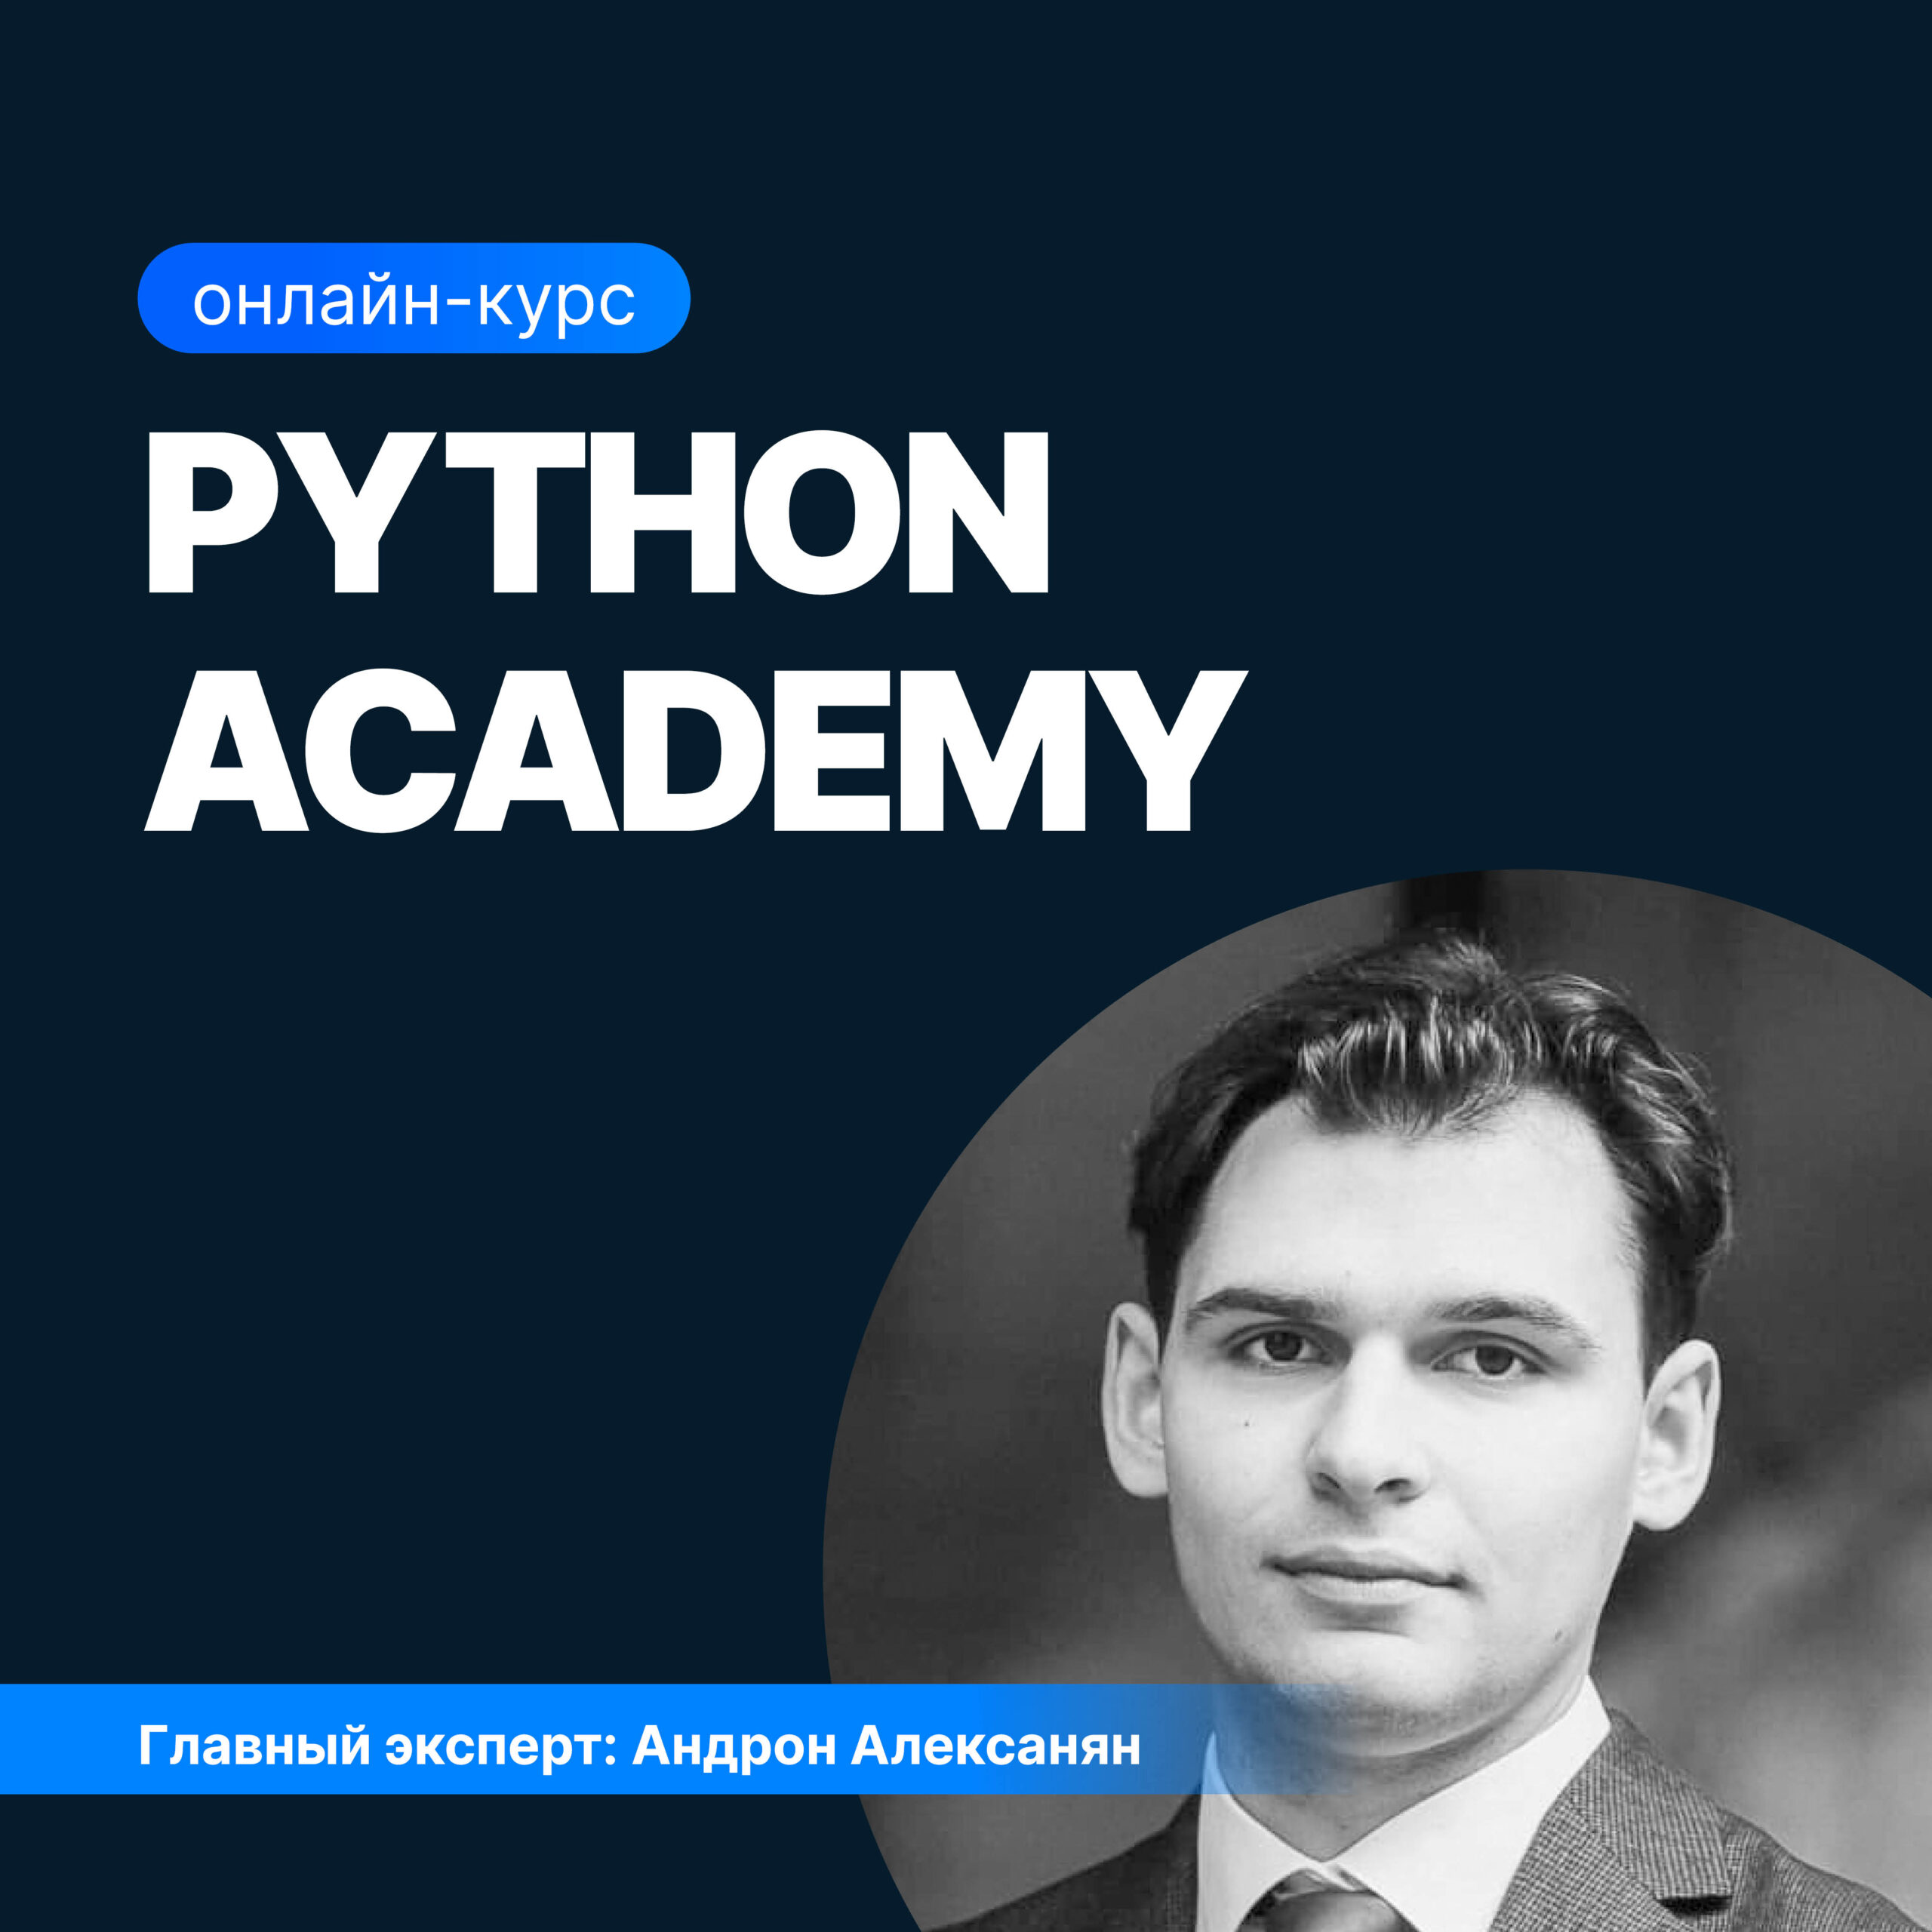 Python Academy python скриптинг для аналитики